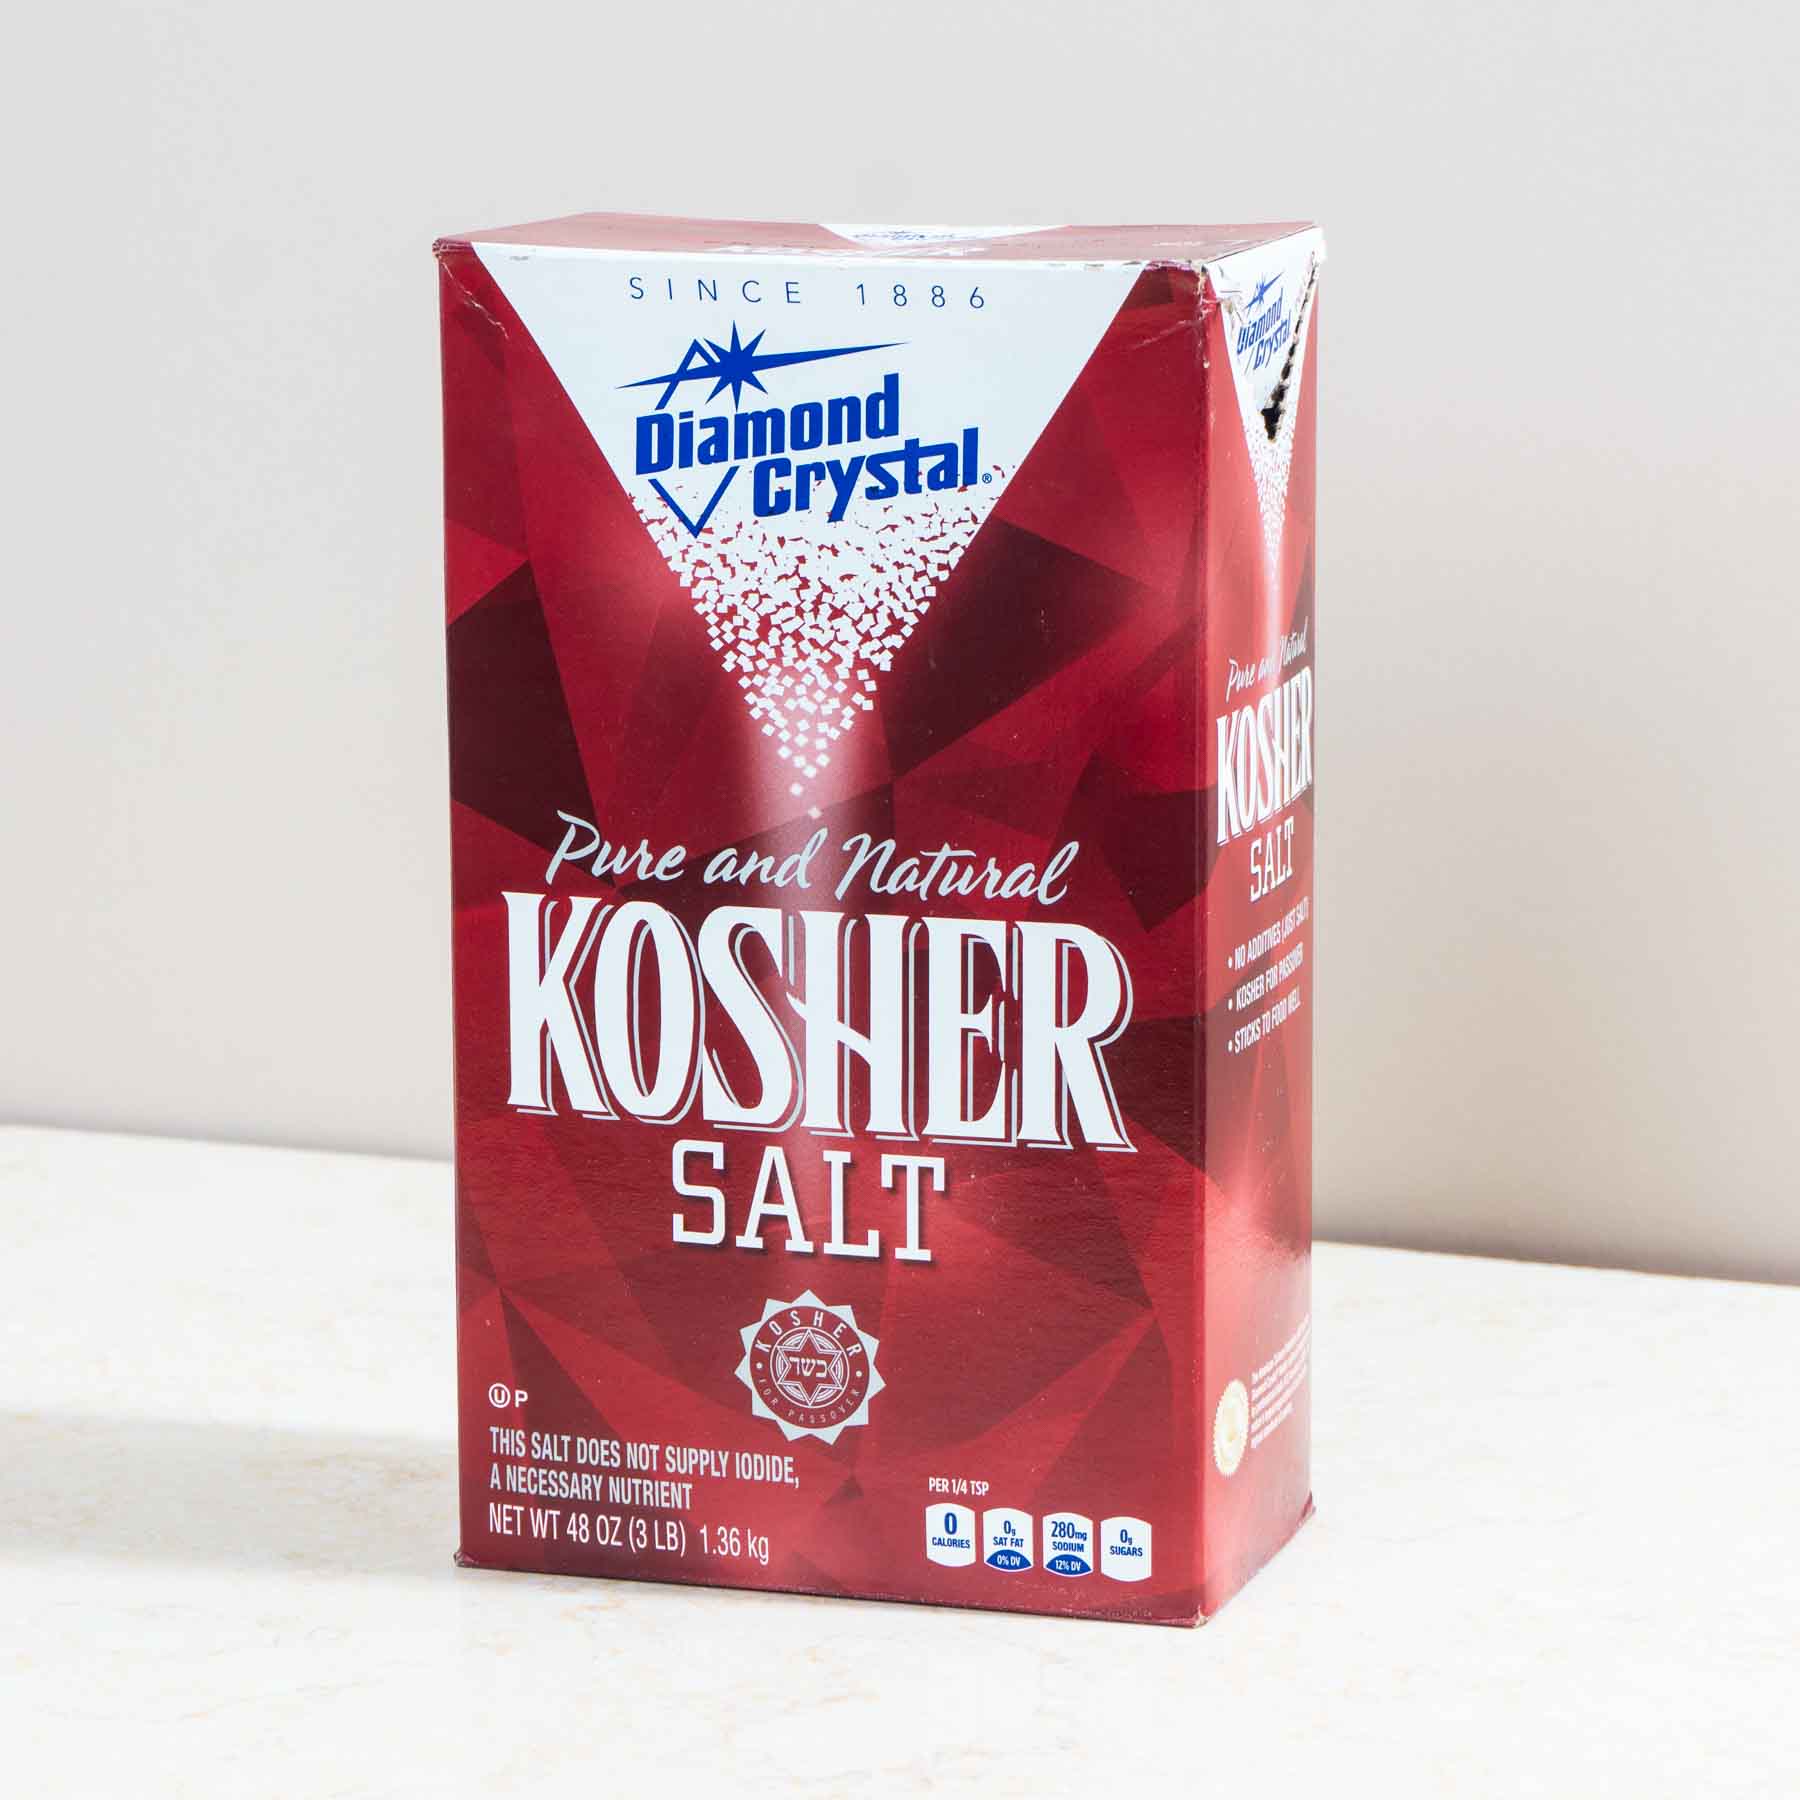 Caldo salt guide kosher salt